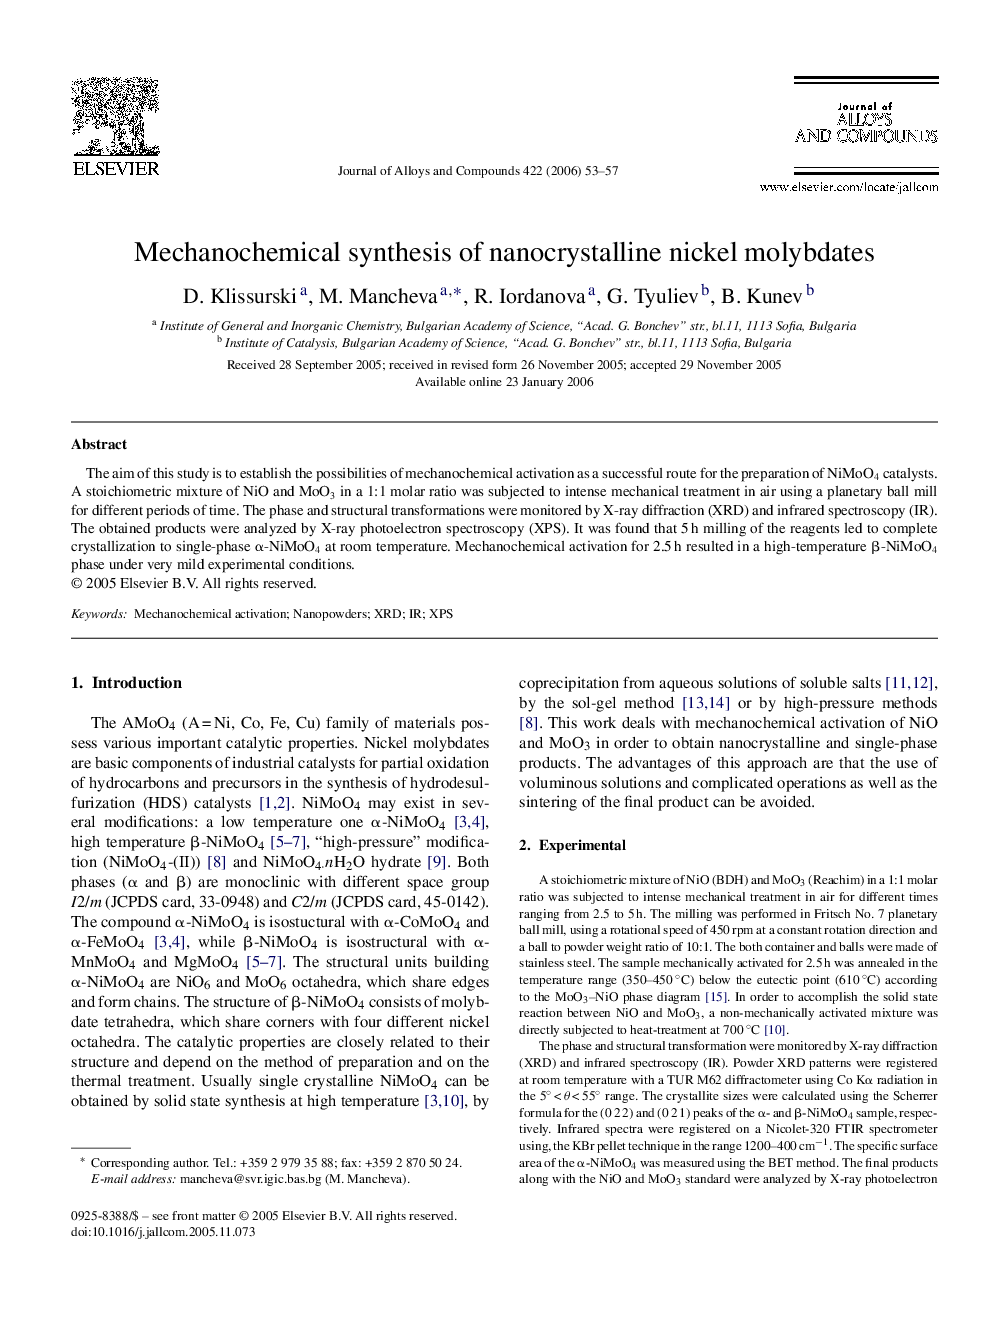 Mechanochemical synthesis of nanocrystalline nickel molybdates